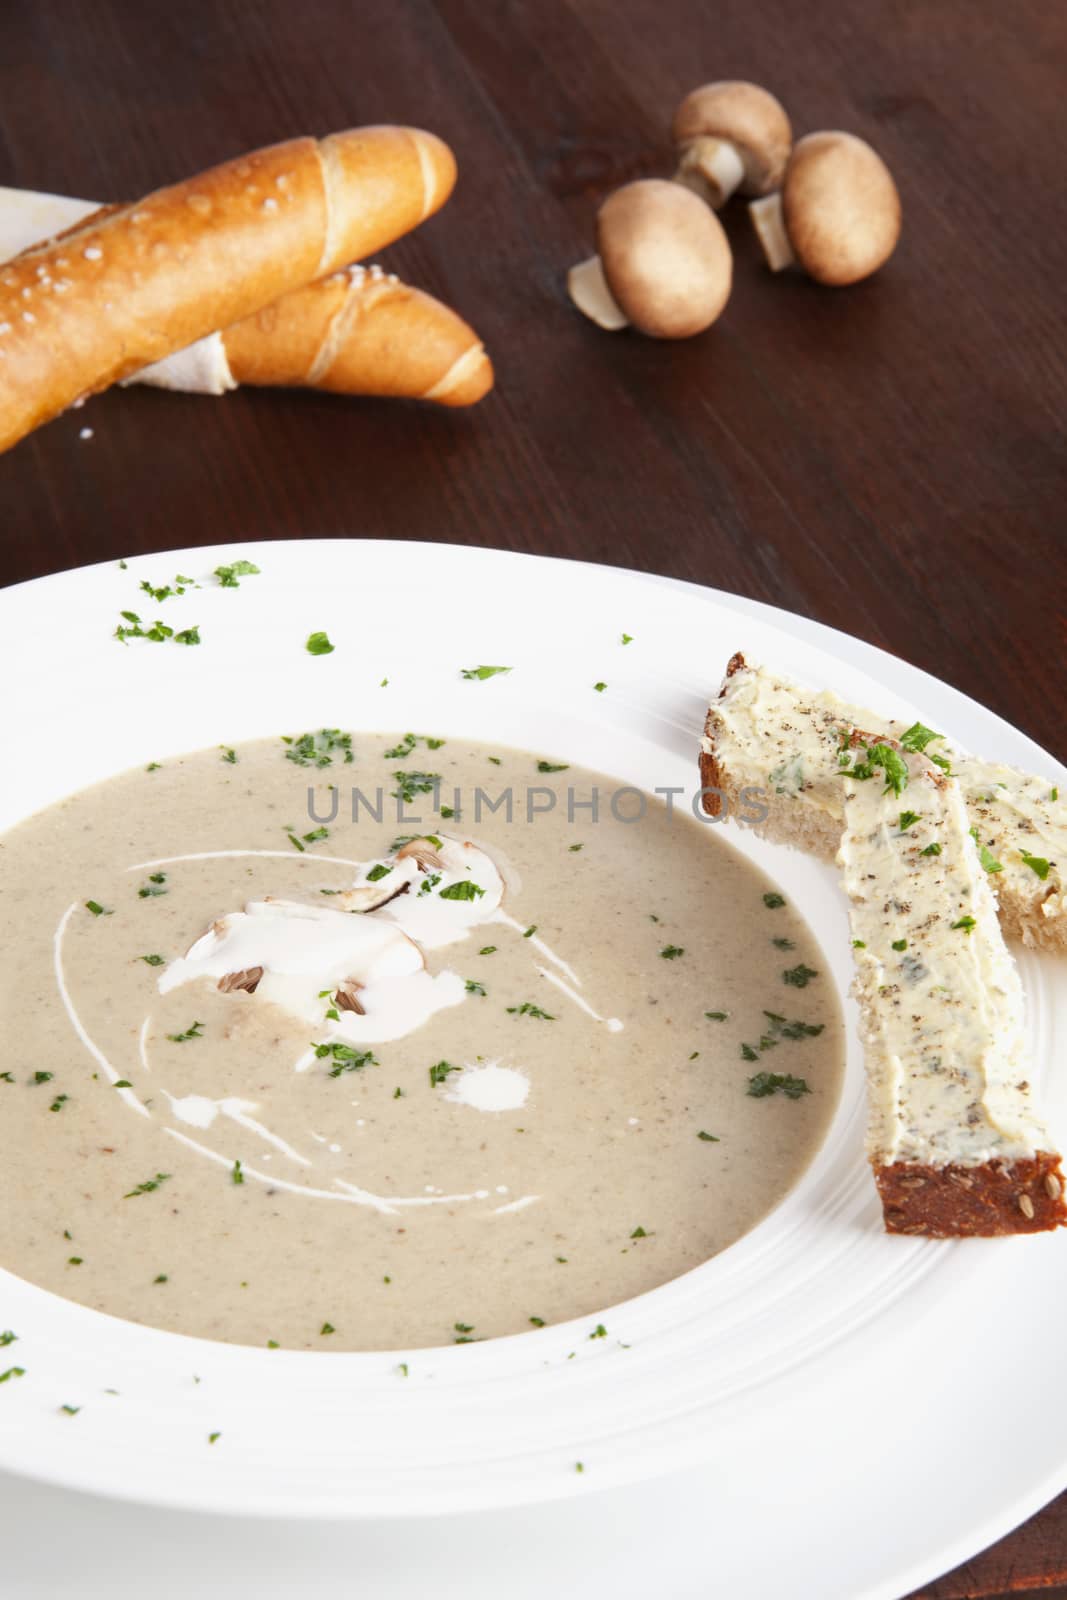 Champignon mushroom cream soup. by eskymaks